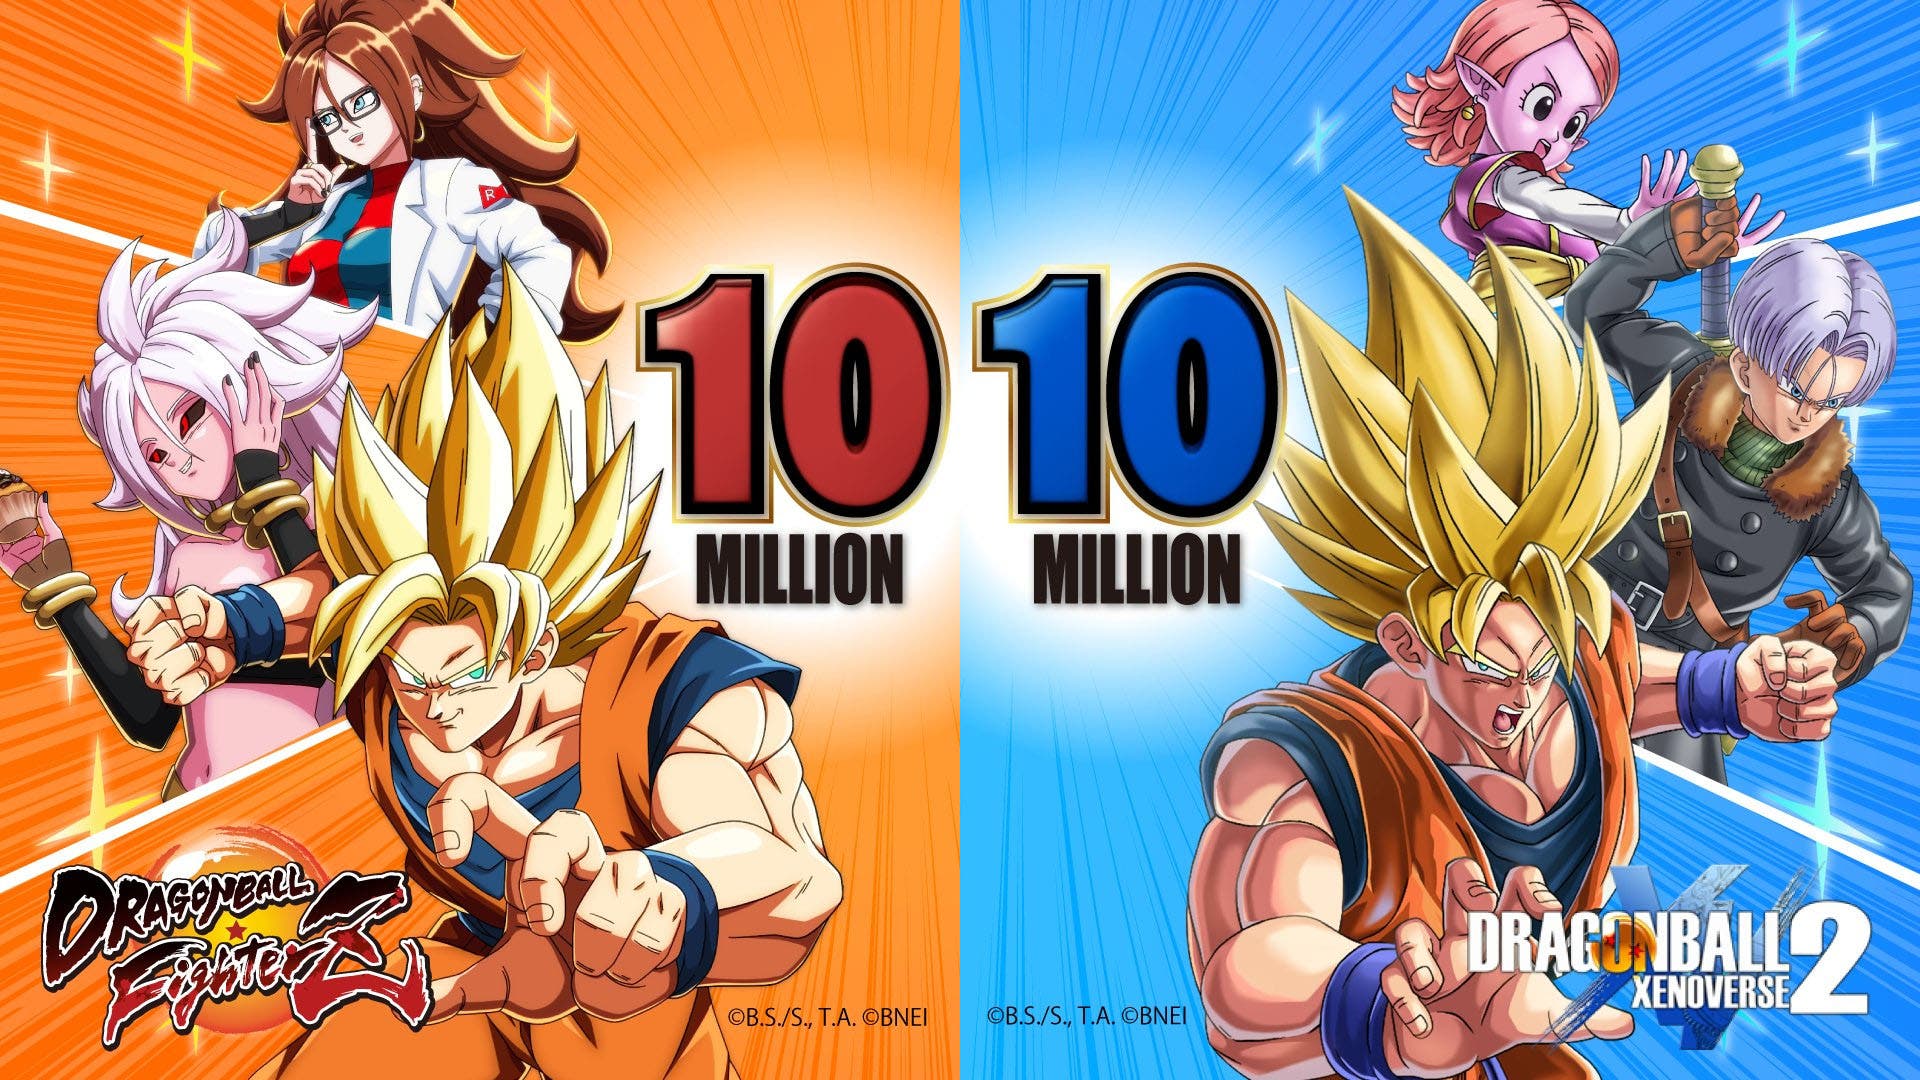 Dragon Ball Z: Kakarot supera a marca de 2 milhões de cópias vendidas